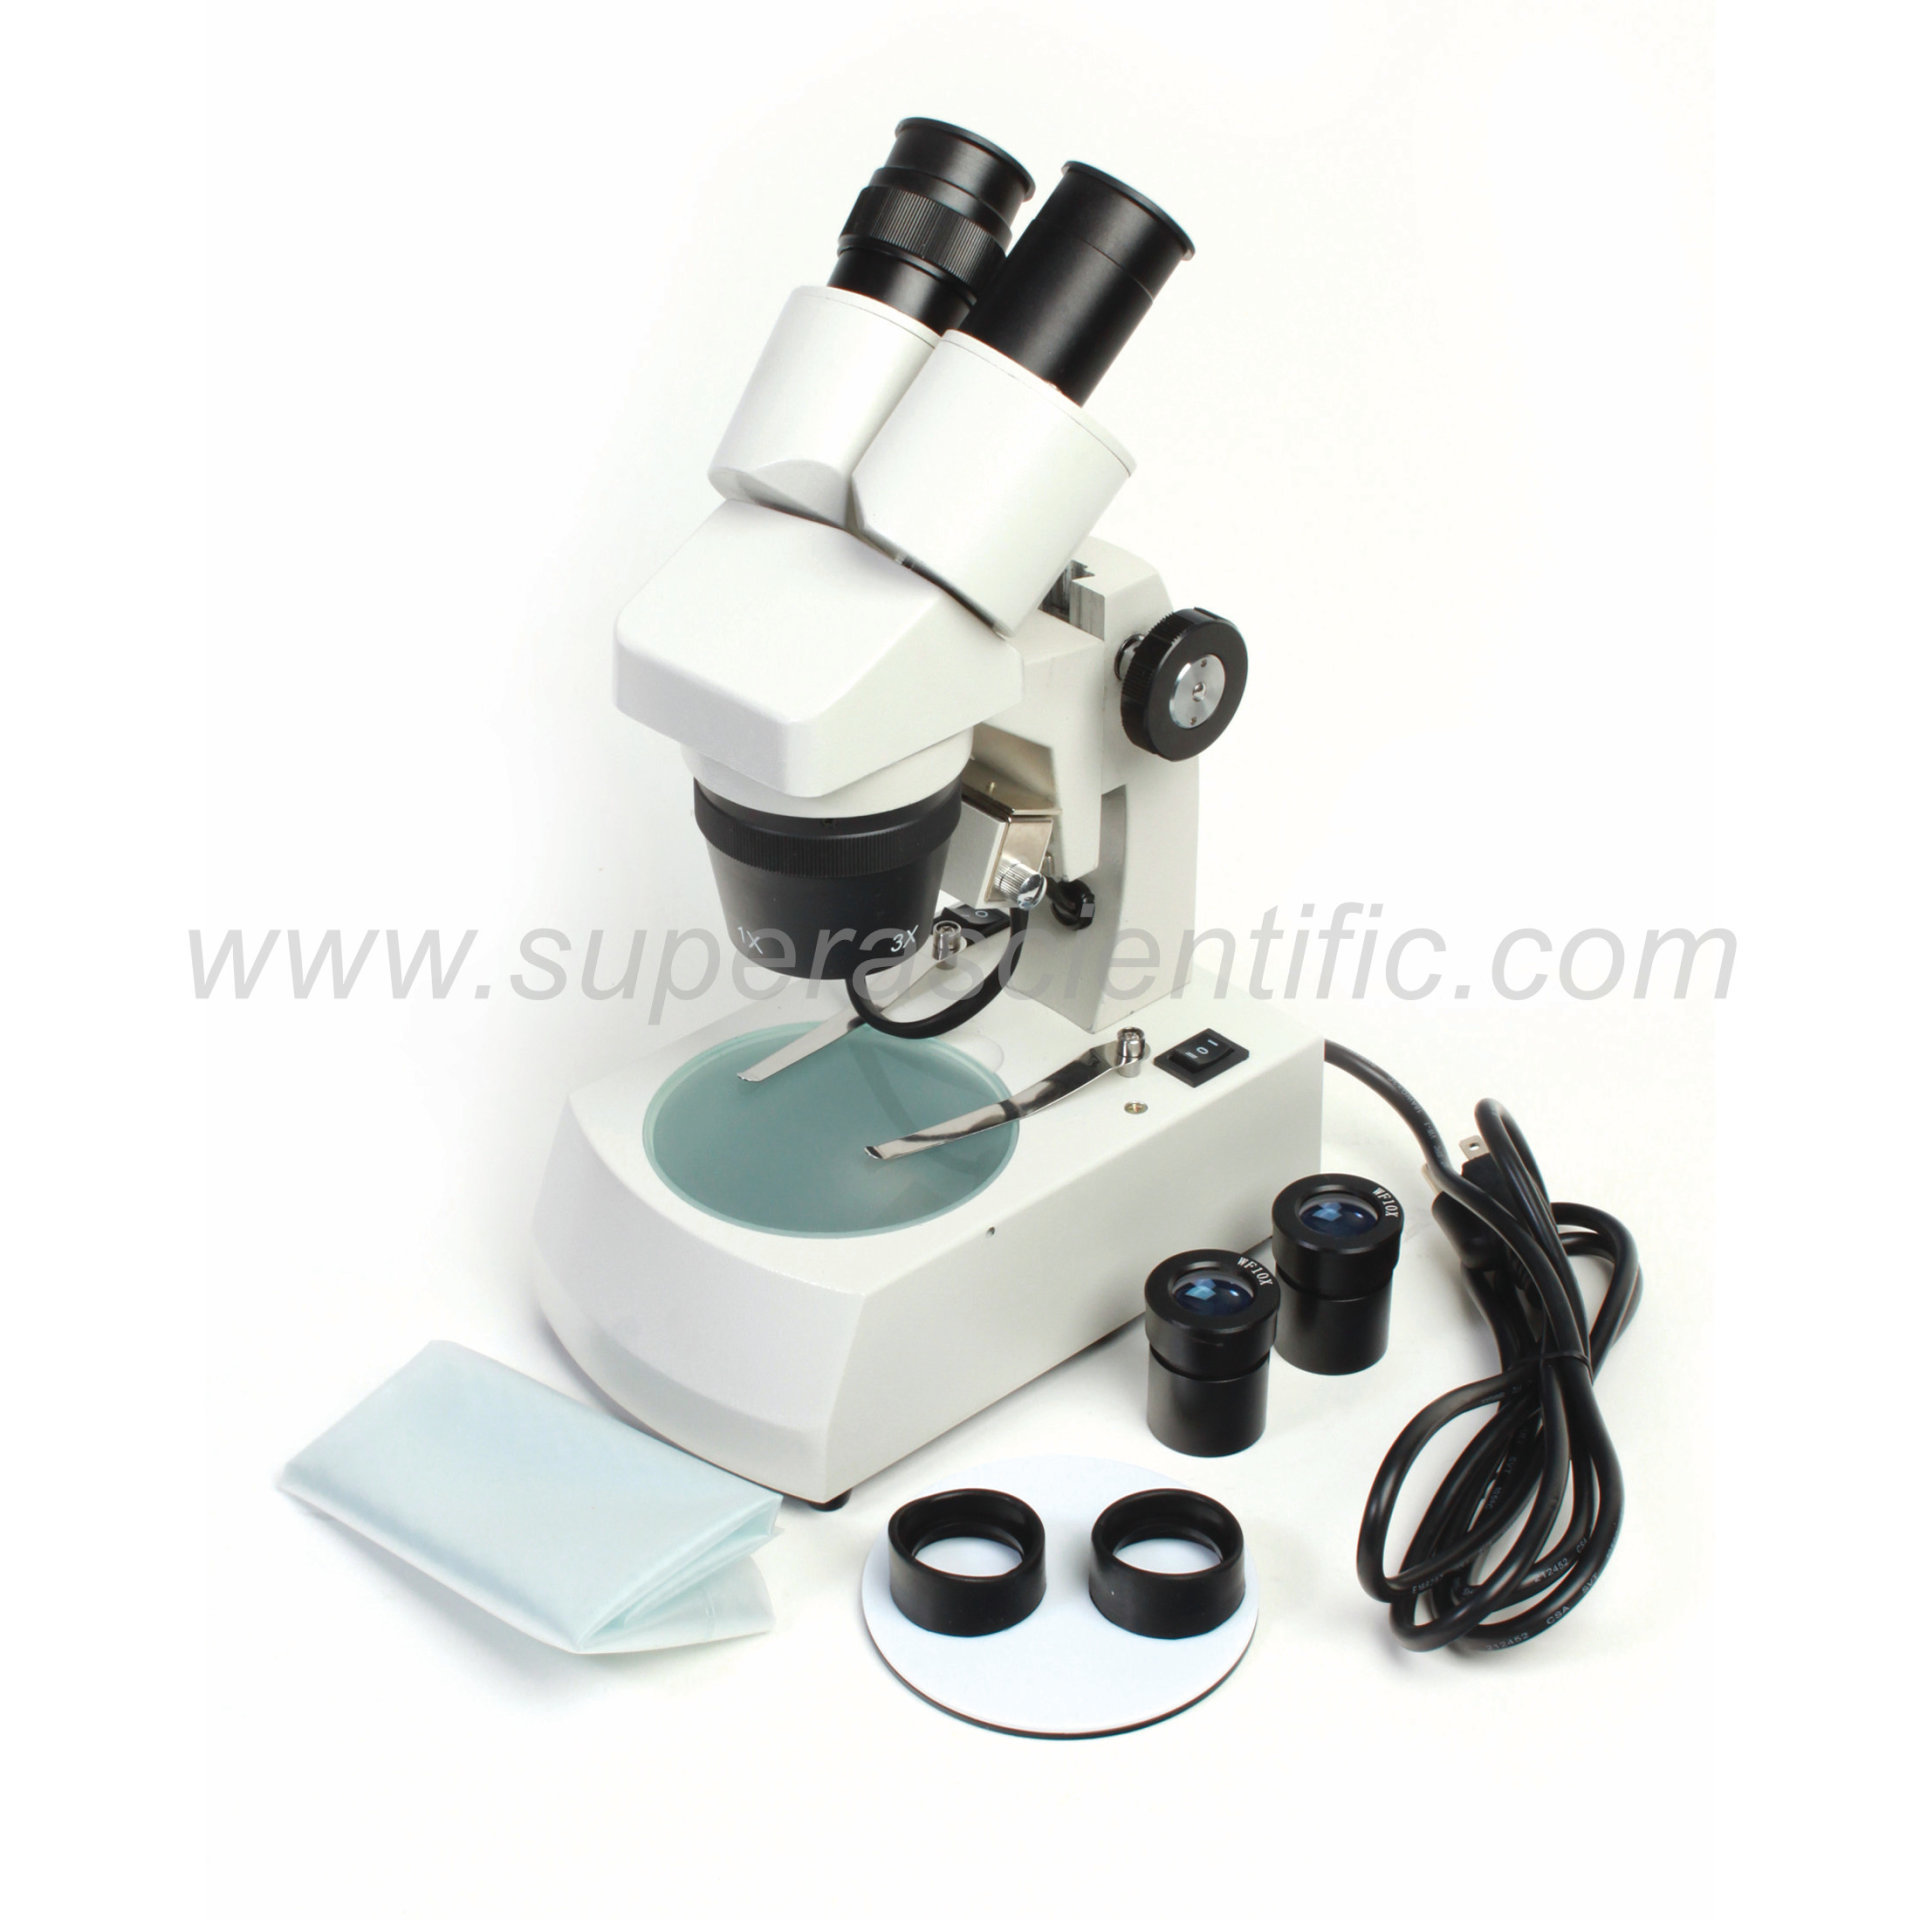 1359 Stereo Microscope